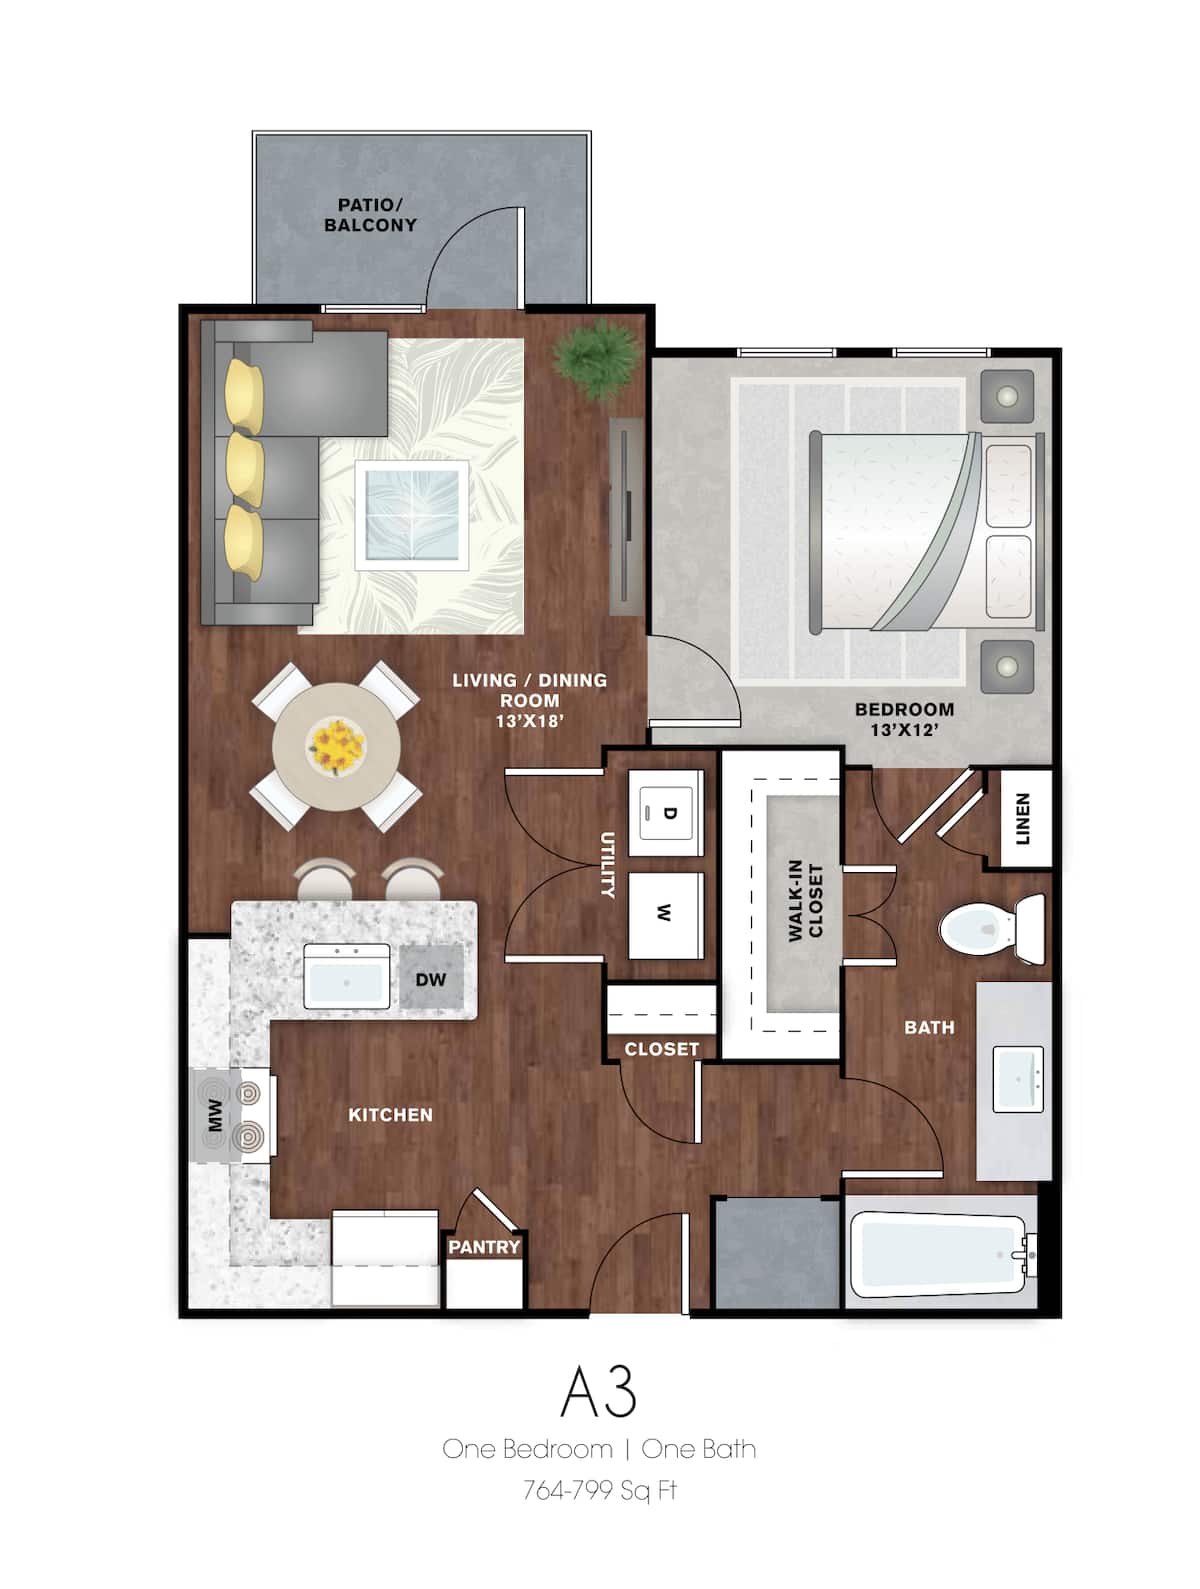 Floorplan diagram for A13, showing 1 bedroom